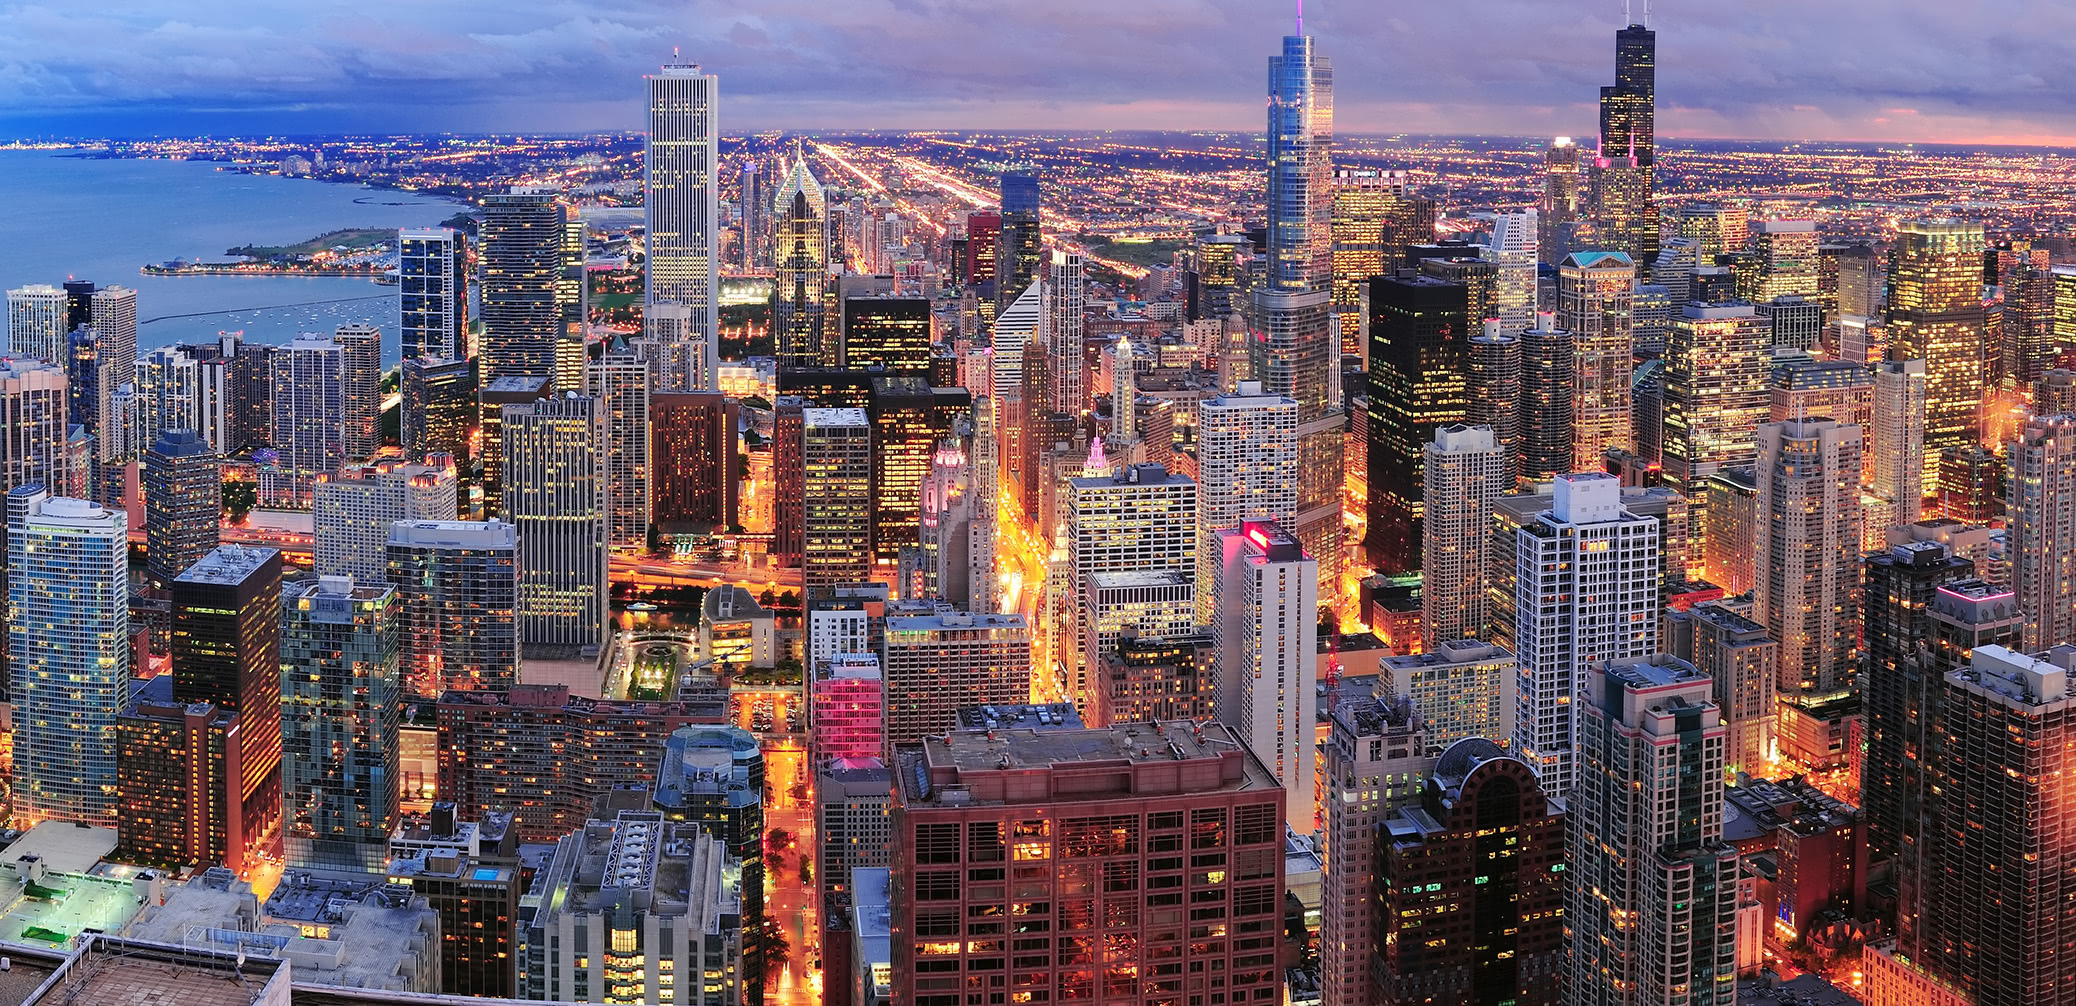 Best Hotel In Chicago: JW Marriott, Ritz Carlton, Four Seasons Or Park Hyatt